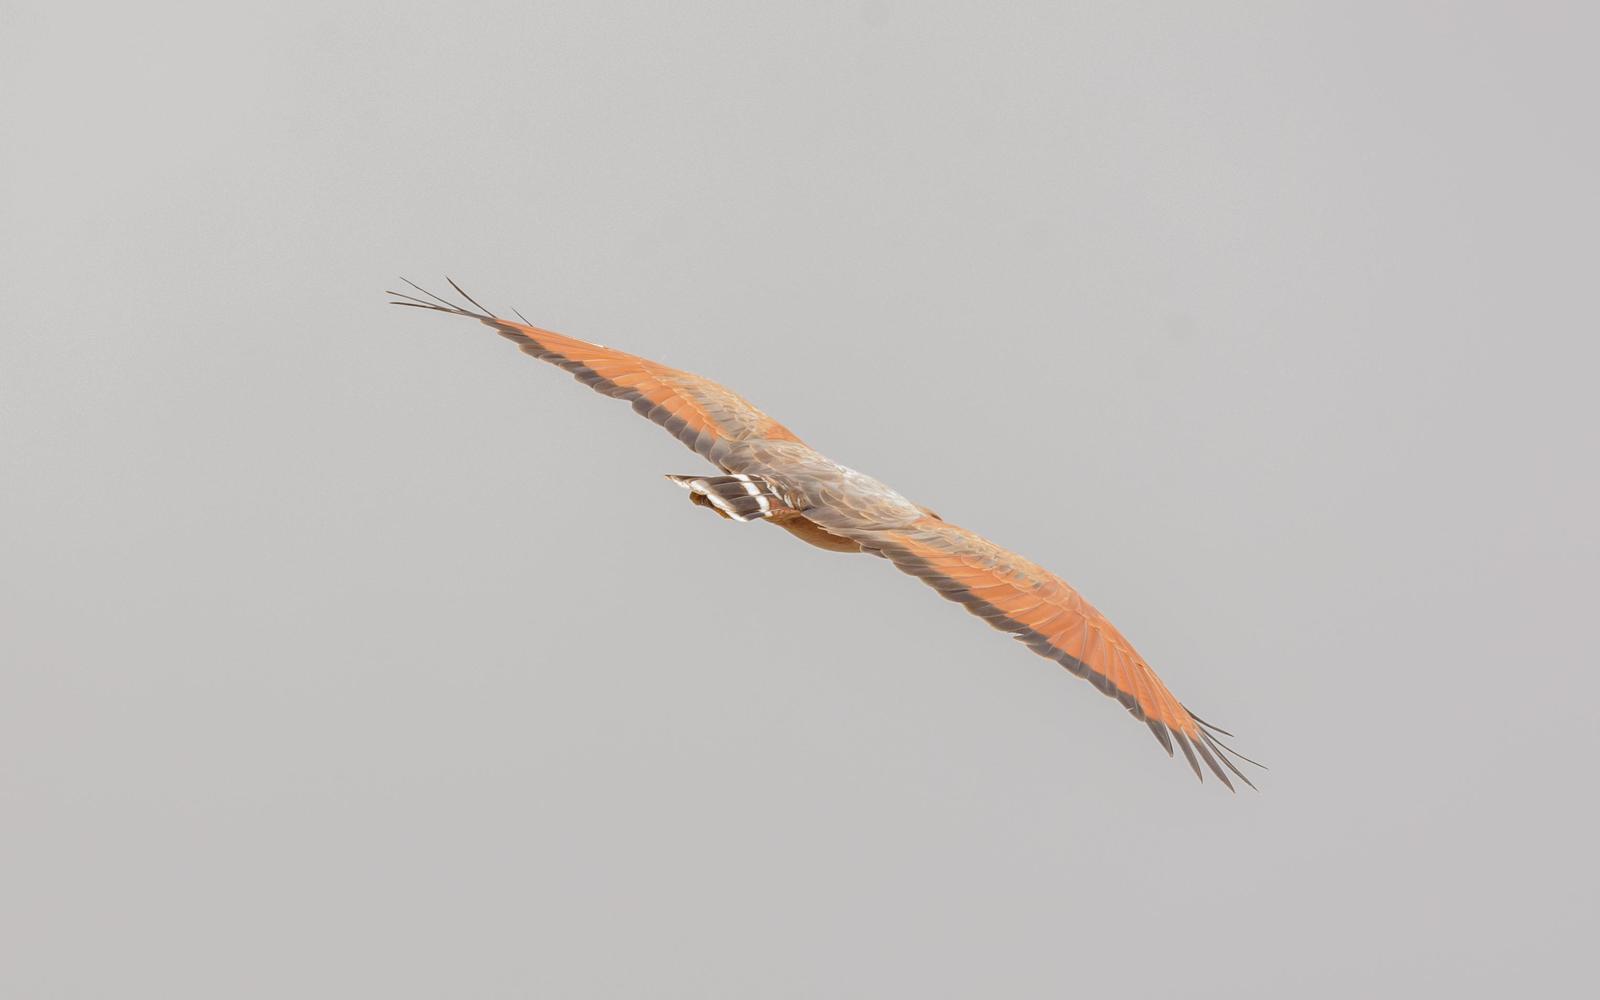 Savanna Hawk Photo by Keshava Mysore